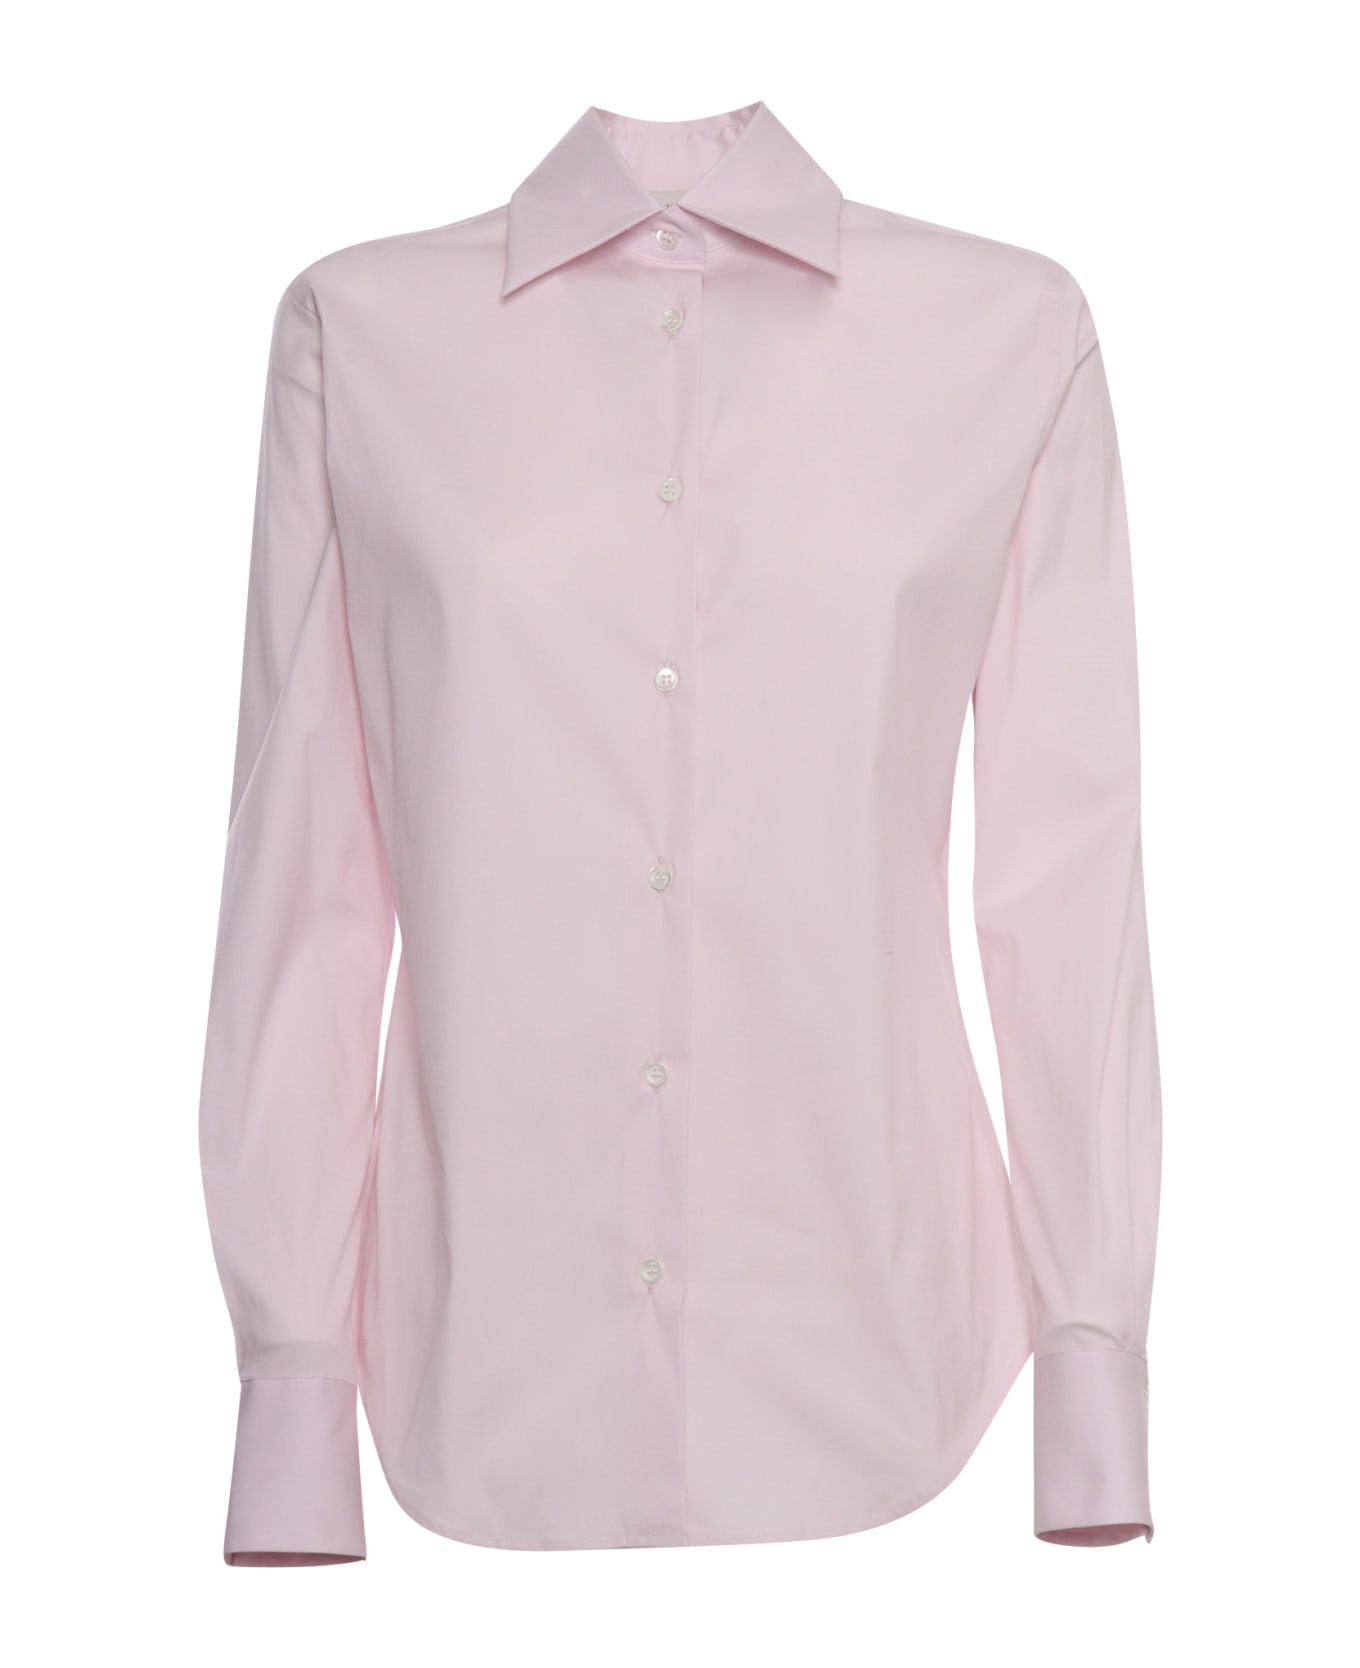 Mazzarelli Pink Shirt - PINK シャツ